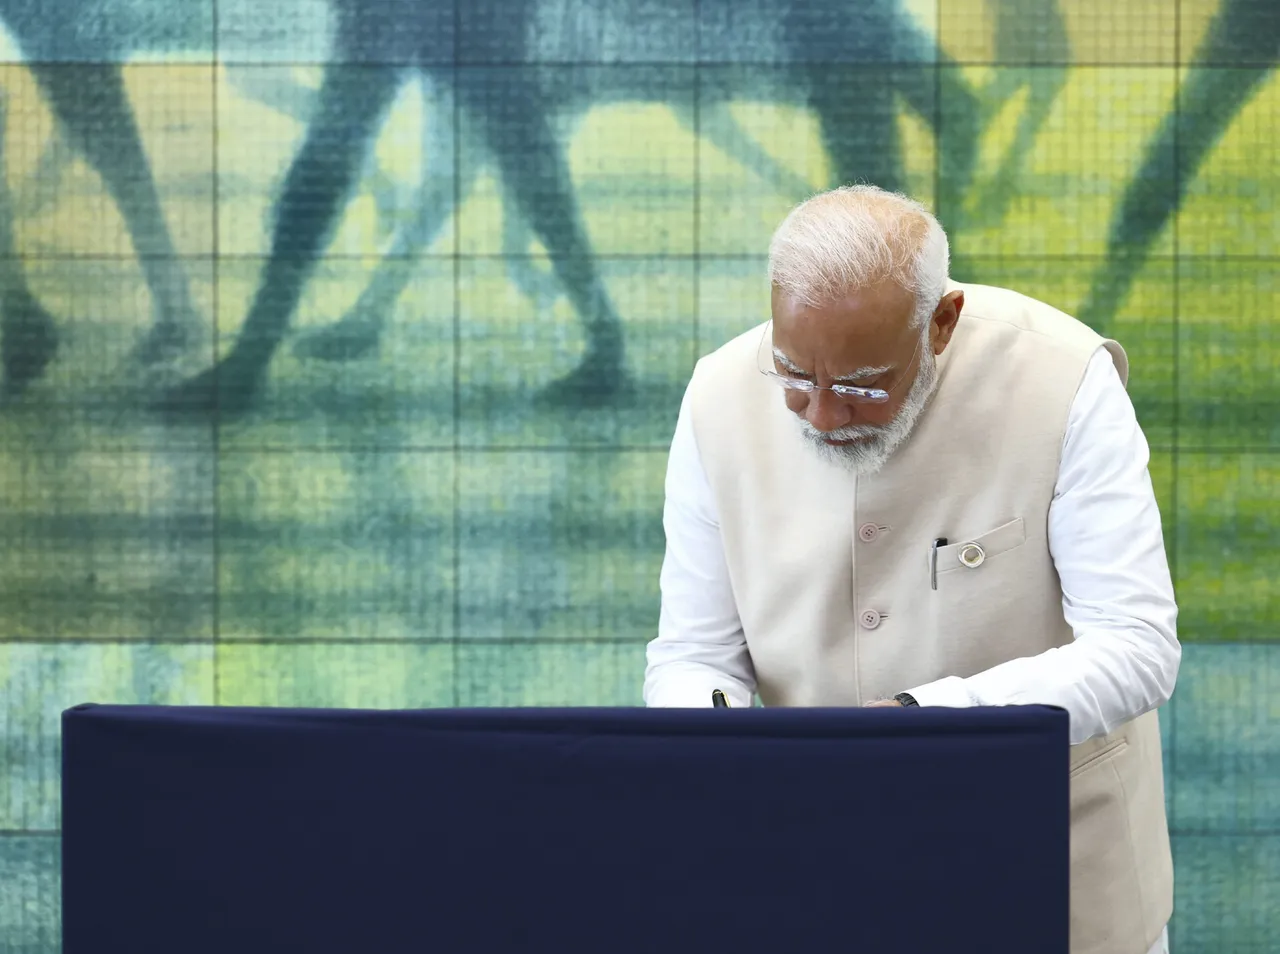 Prime Minister Narendra Modi signs the visitor’s book during his visit to the Hiroshima Peace Memorial Museum, in Hiroshima, Japan